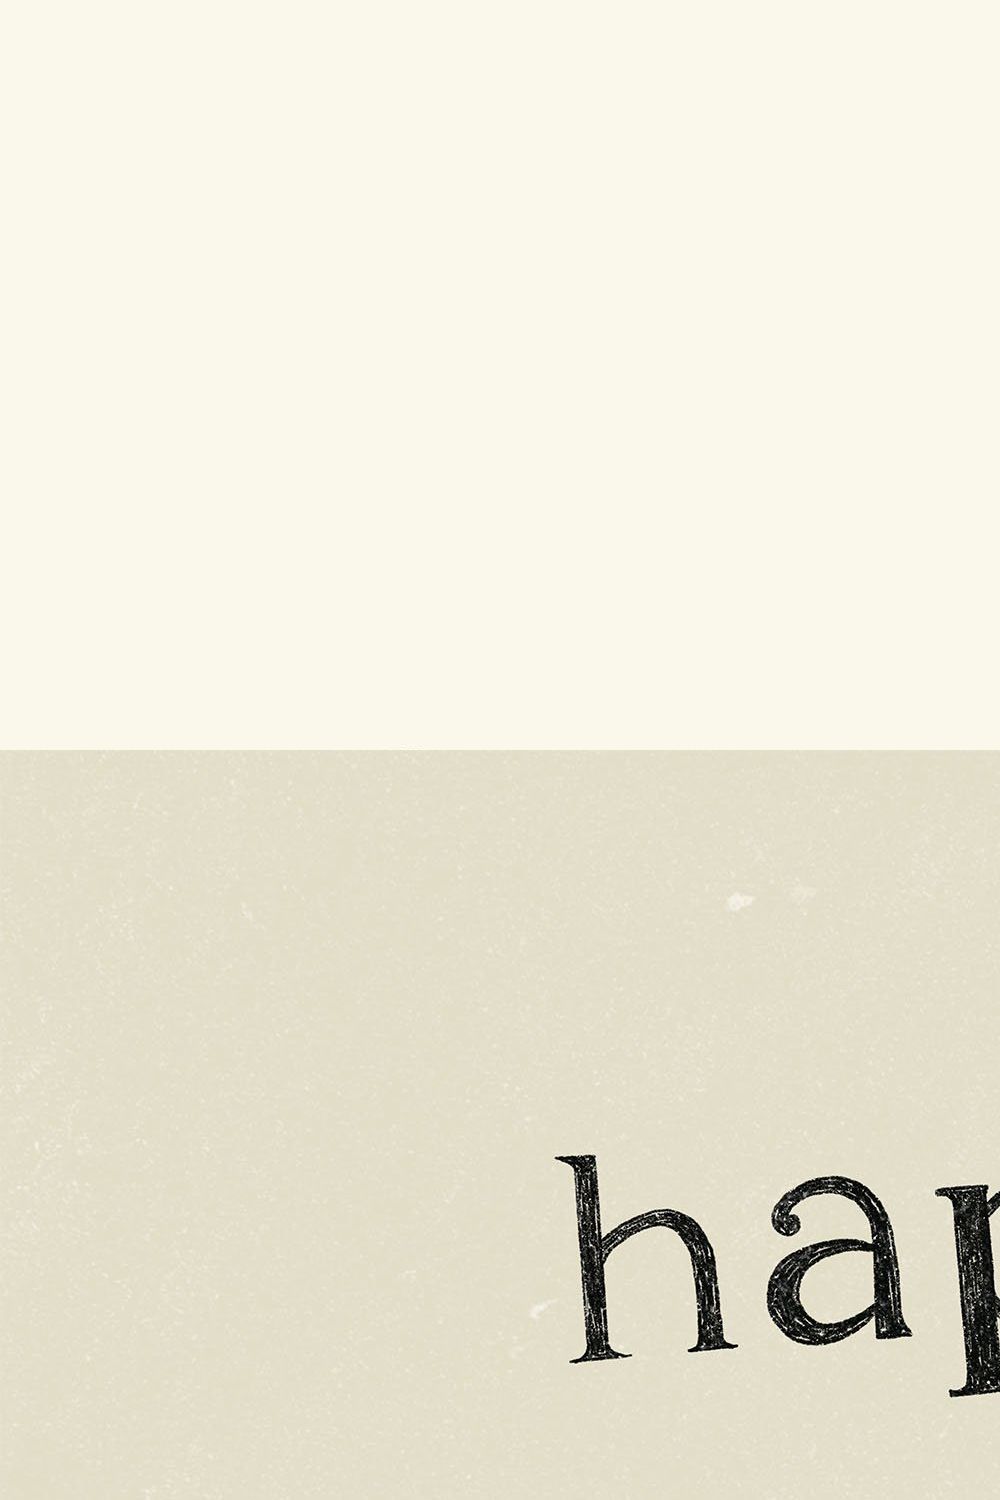 Bergenia, SVG pencil texture font pinterest preview image.